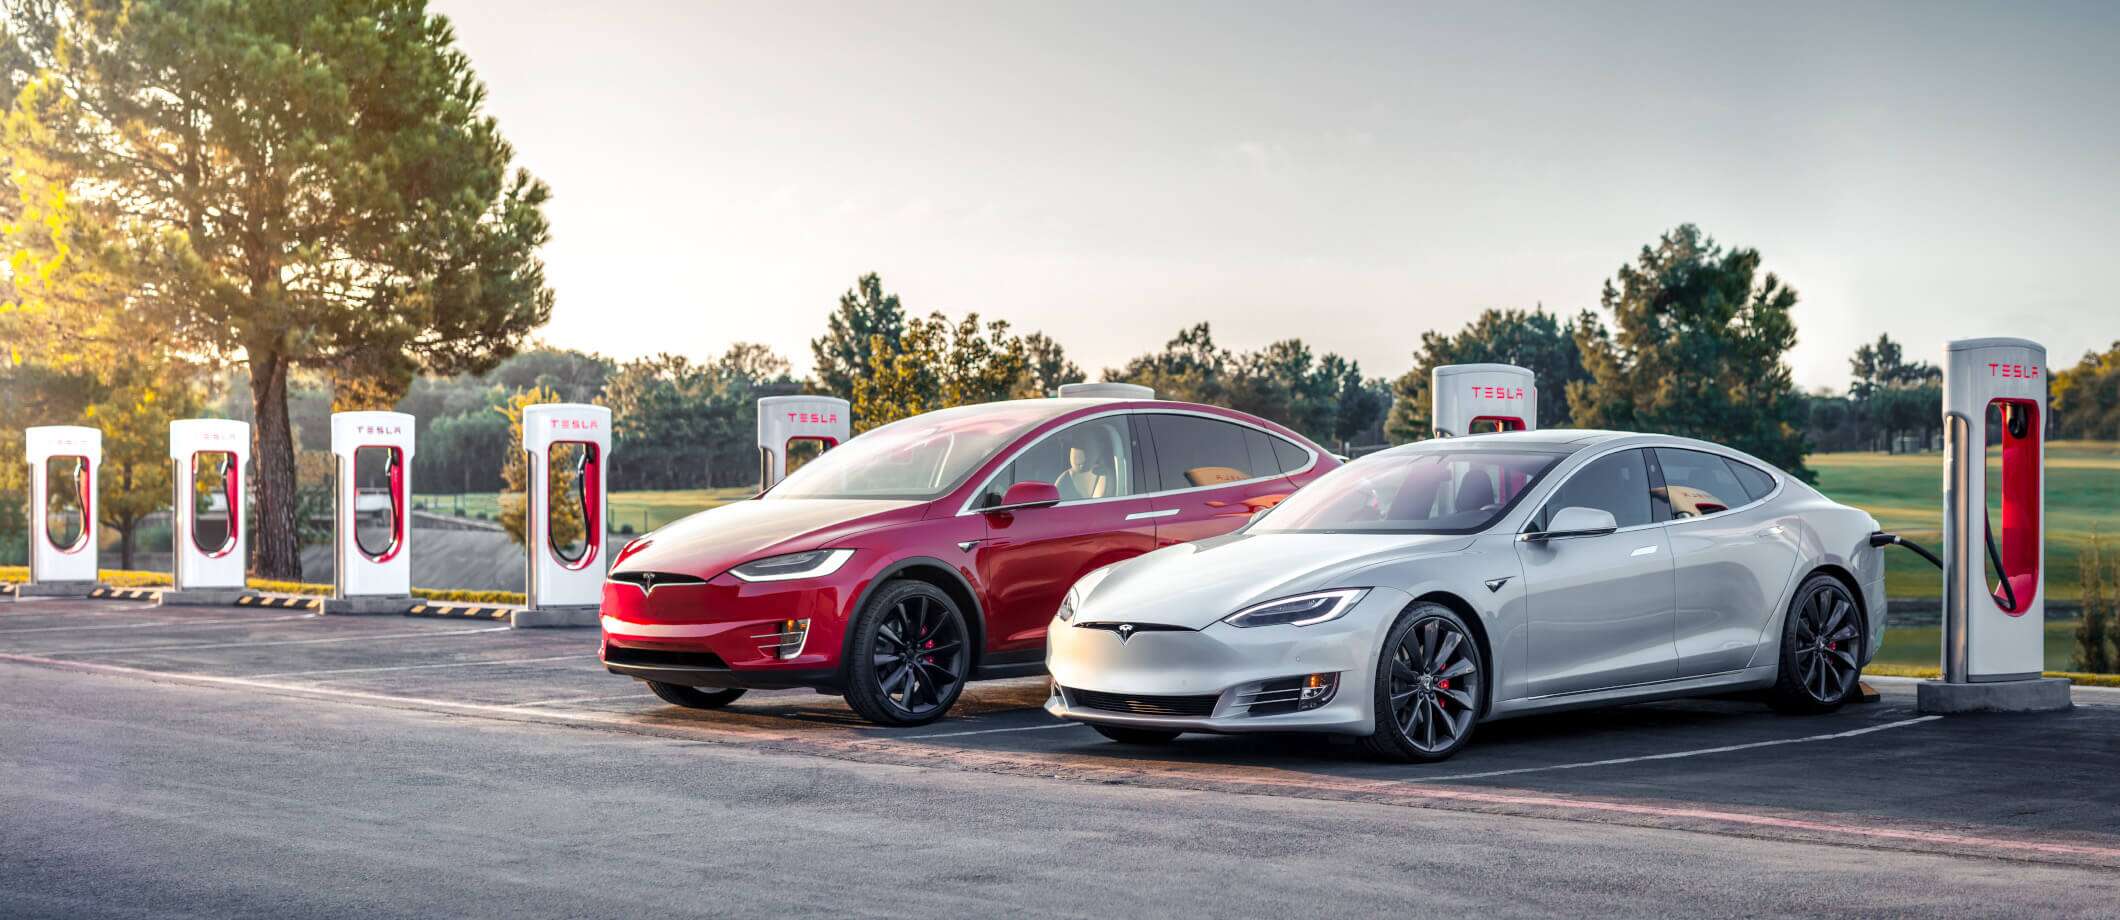 Tesla Model S e Model X